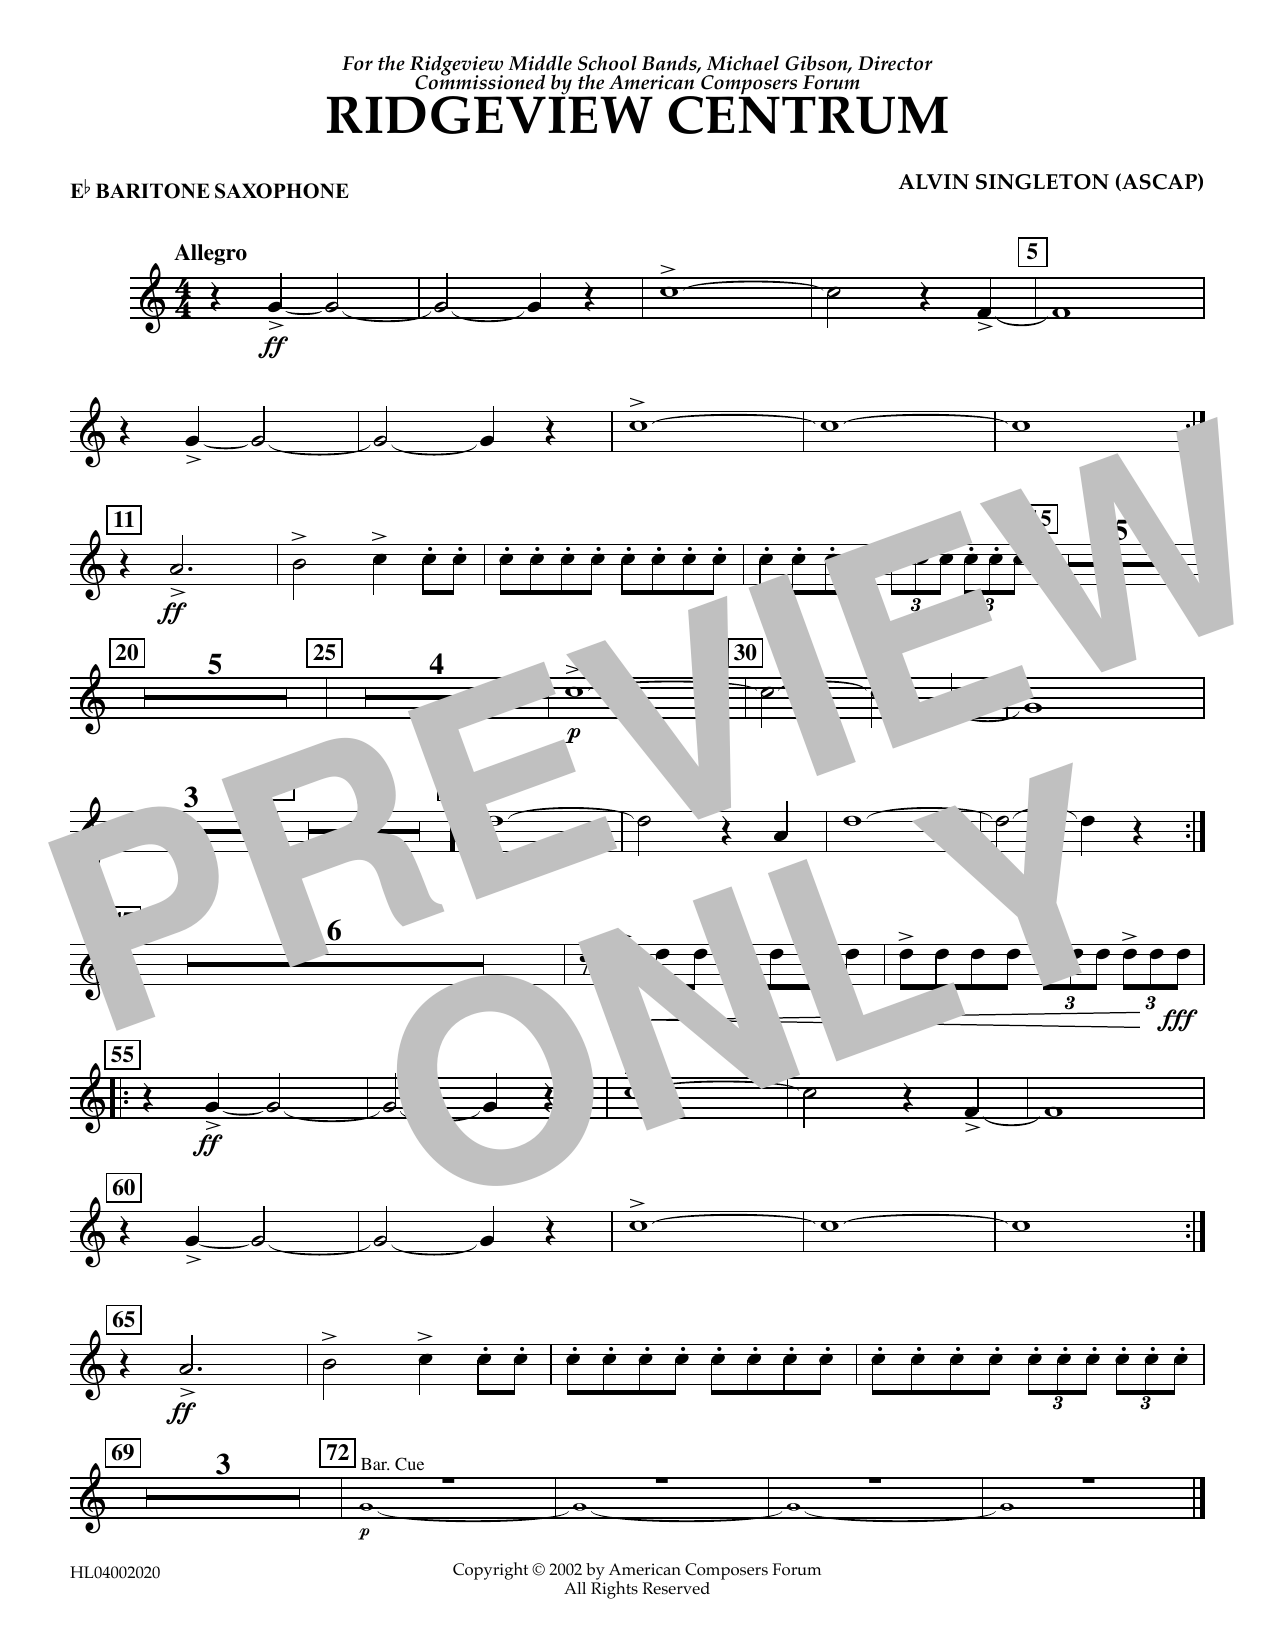 Alvin Singleton Ridgeview Centrum - Eb Baritone Saxophone Sheet Music Notes & Chords for Concert Band - Download or Print PDF